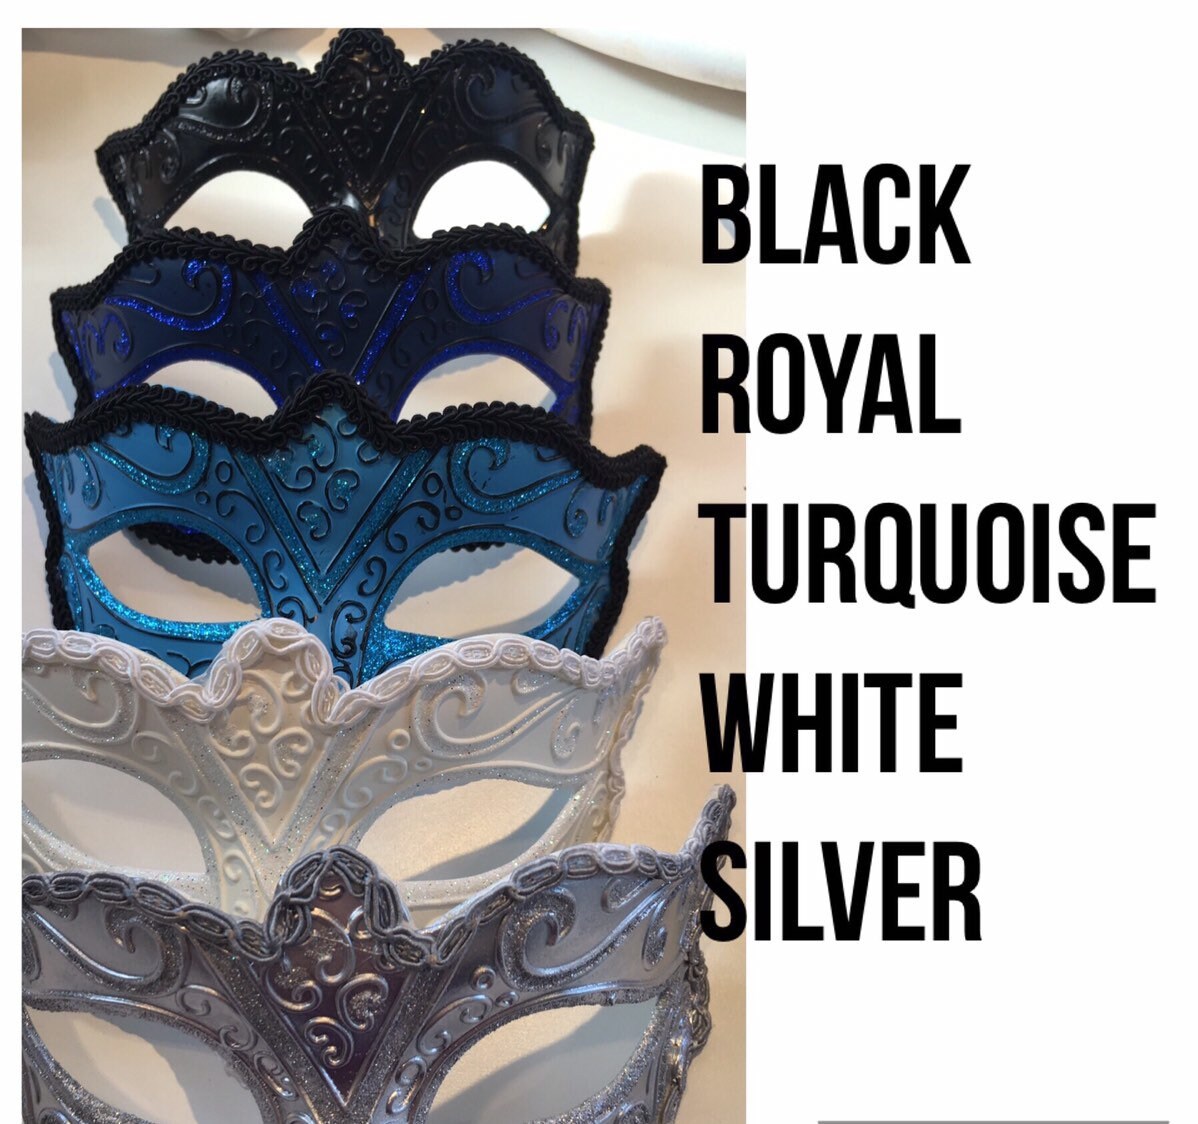 Black Mens Masquerade Mask Christmas Party Mask for Men Wedding